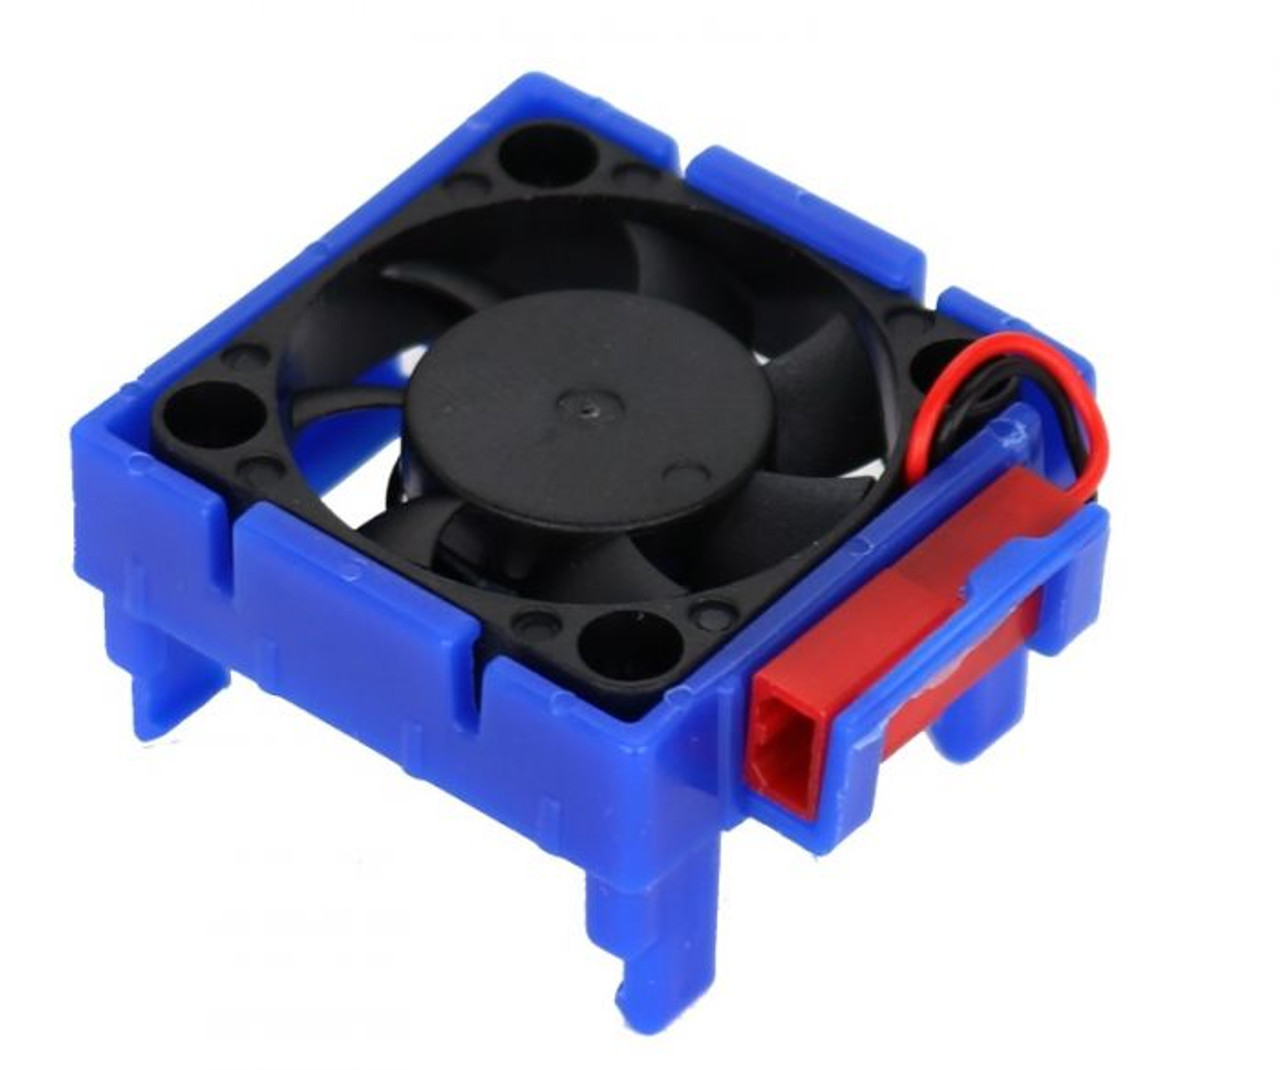 Power Hobby Cooling Fan, for Traxxas Velineon VLX-3, Blue